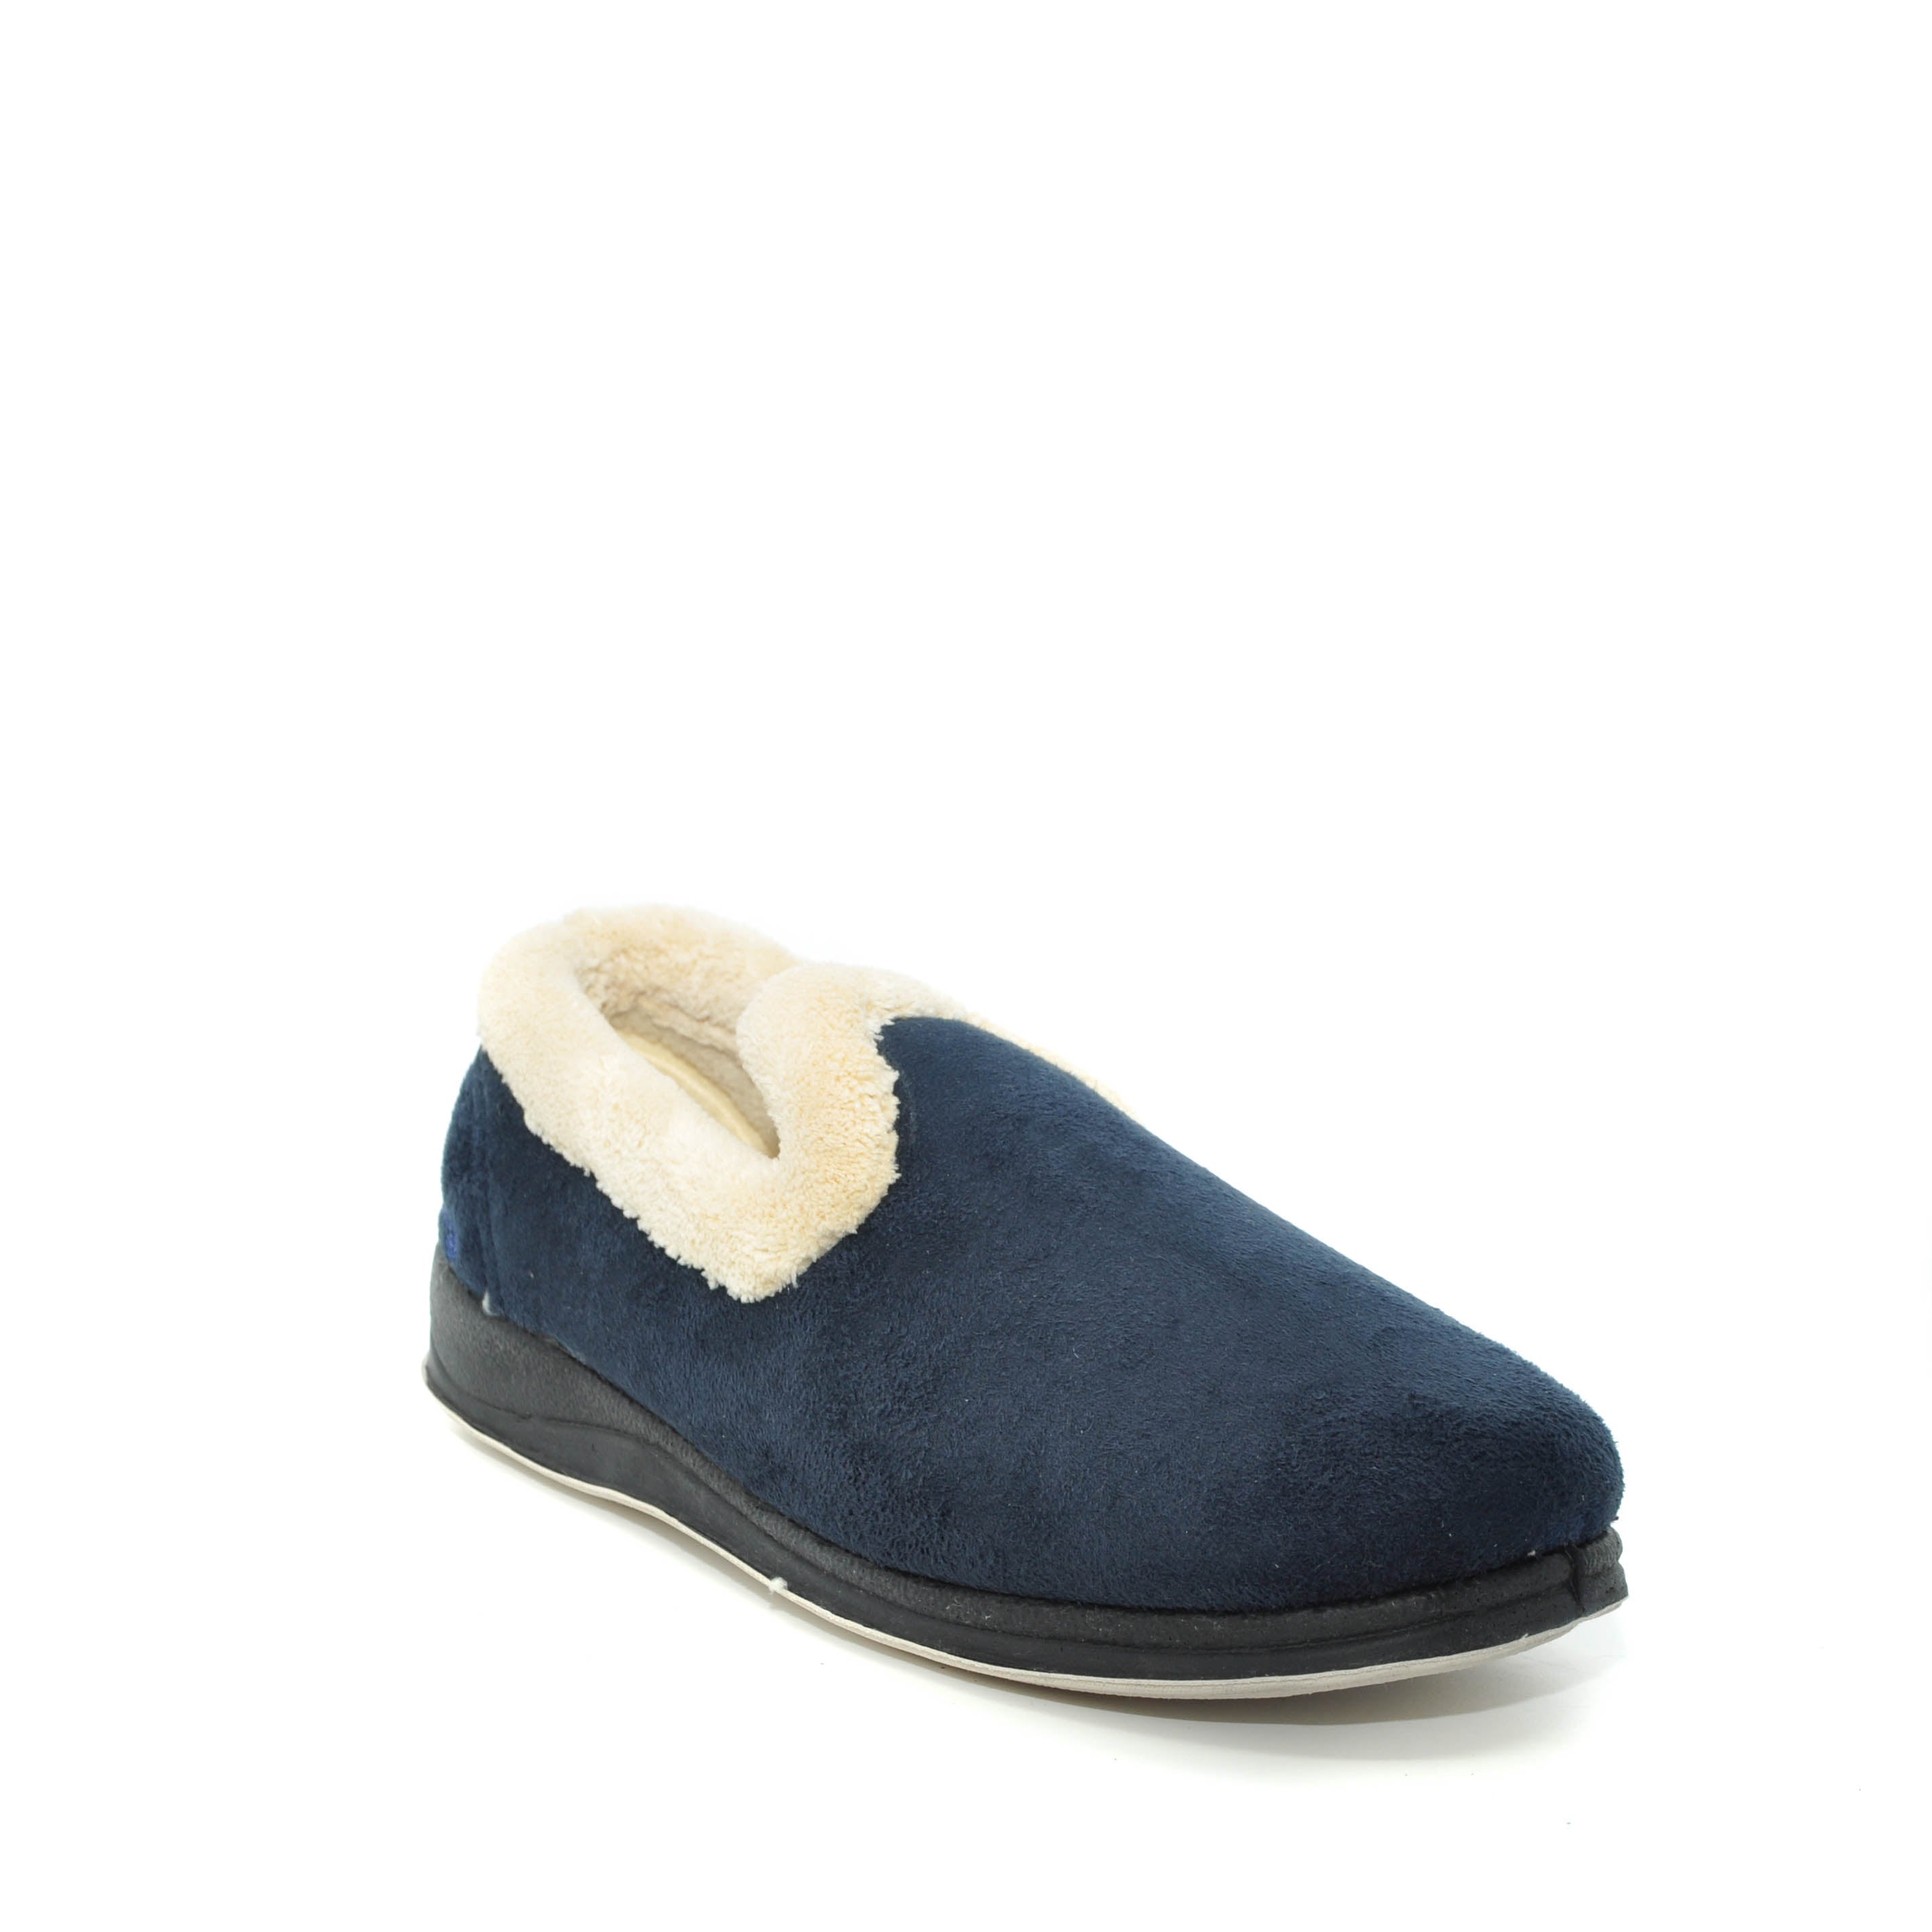 slippers ireland | luxury slippers women | slippers online